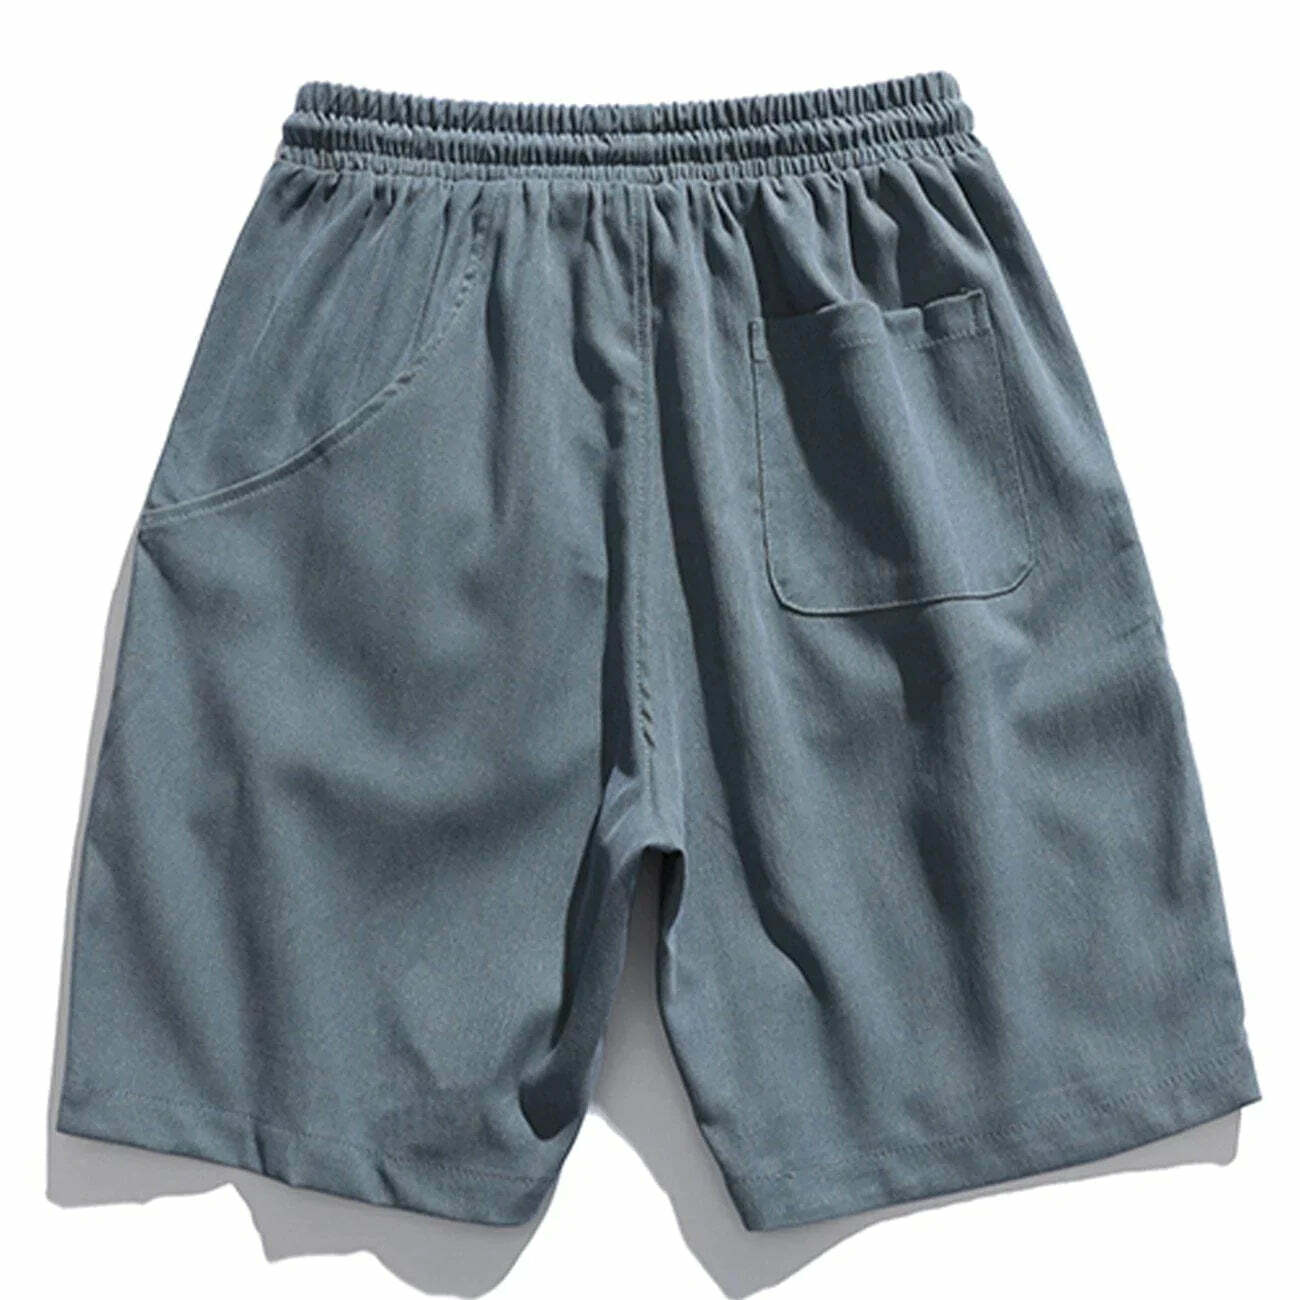 solid panel shorts minimalist streetwear essential 3787